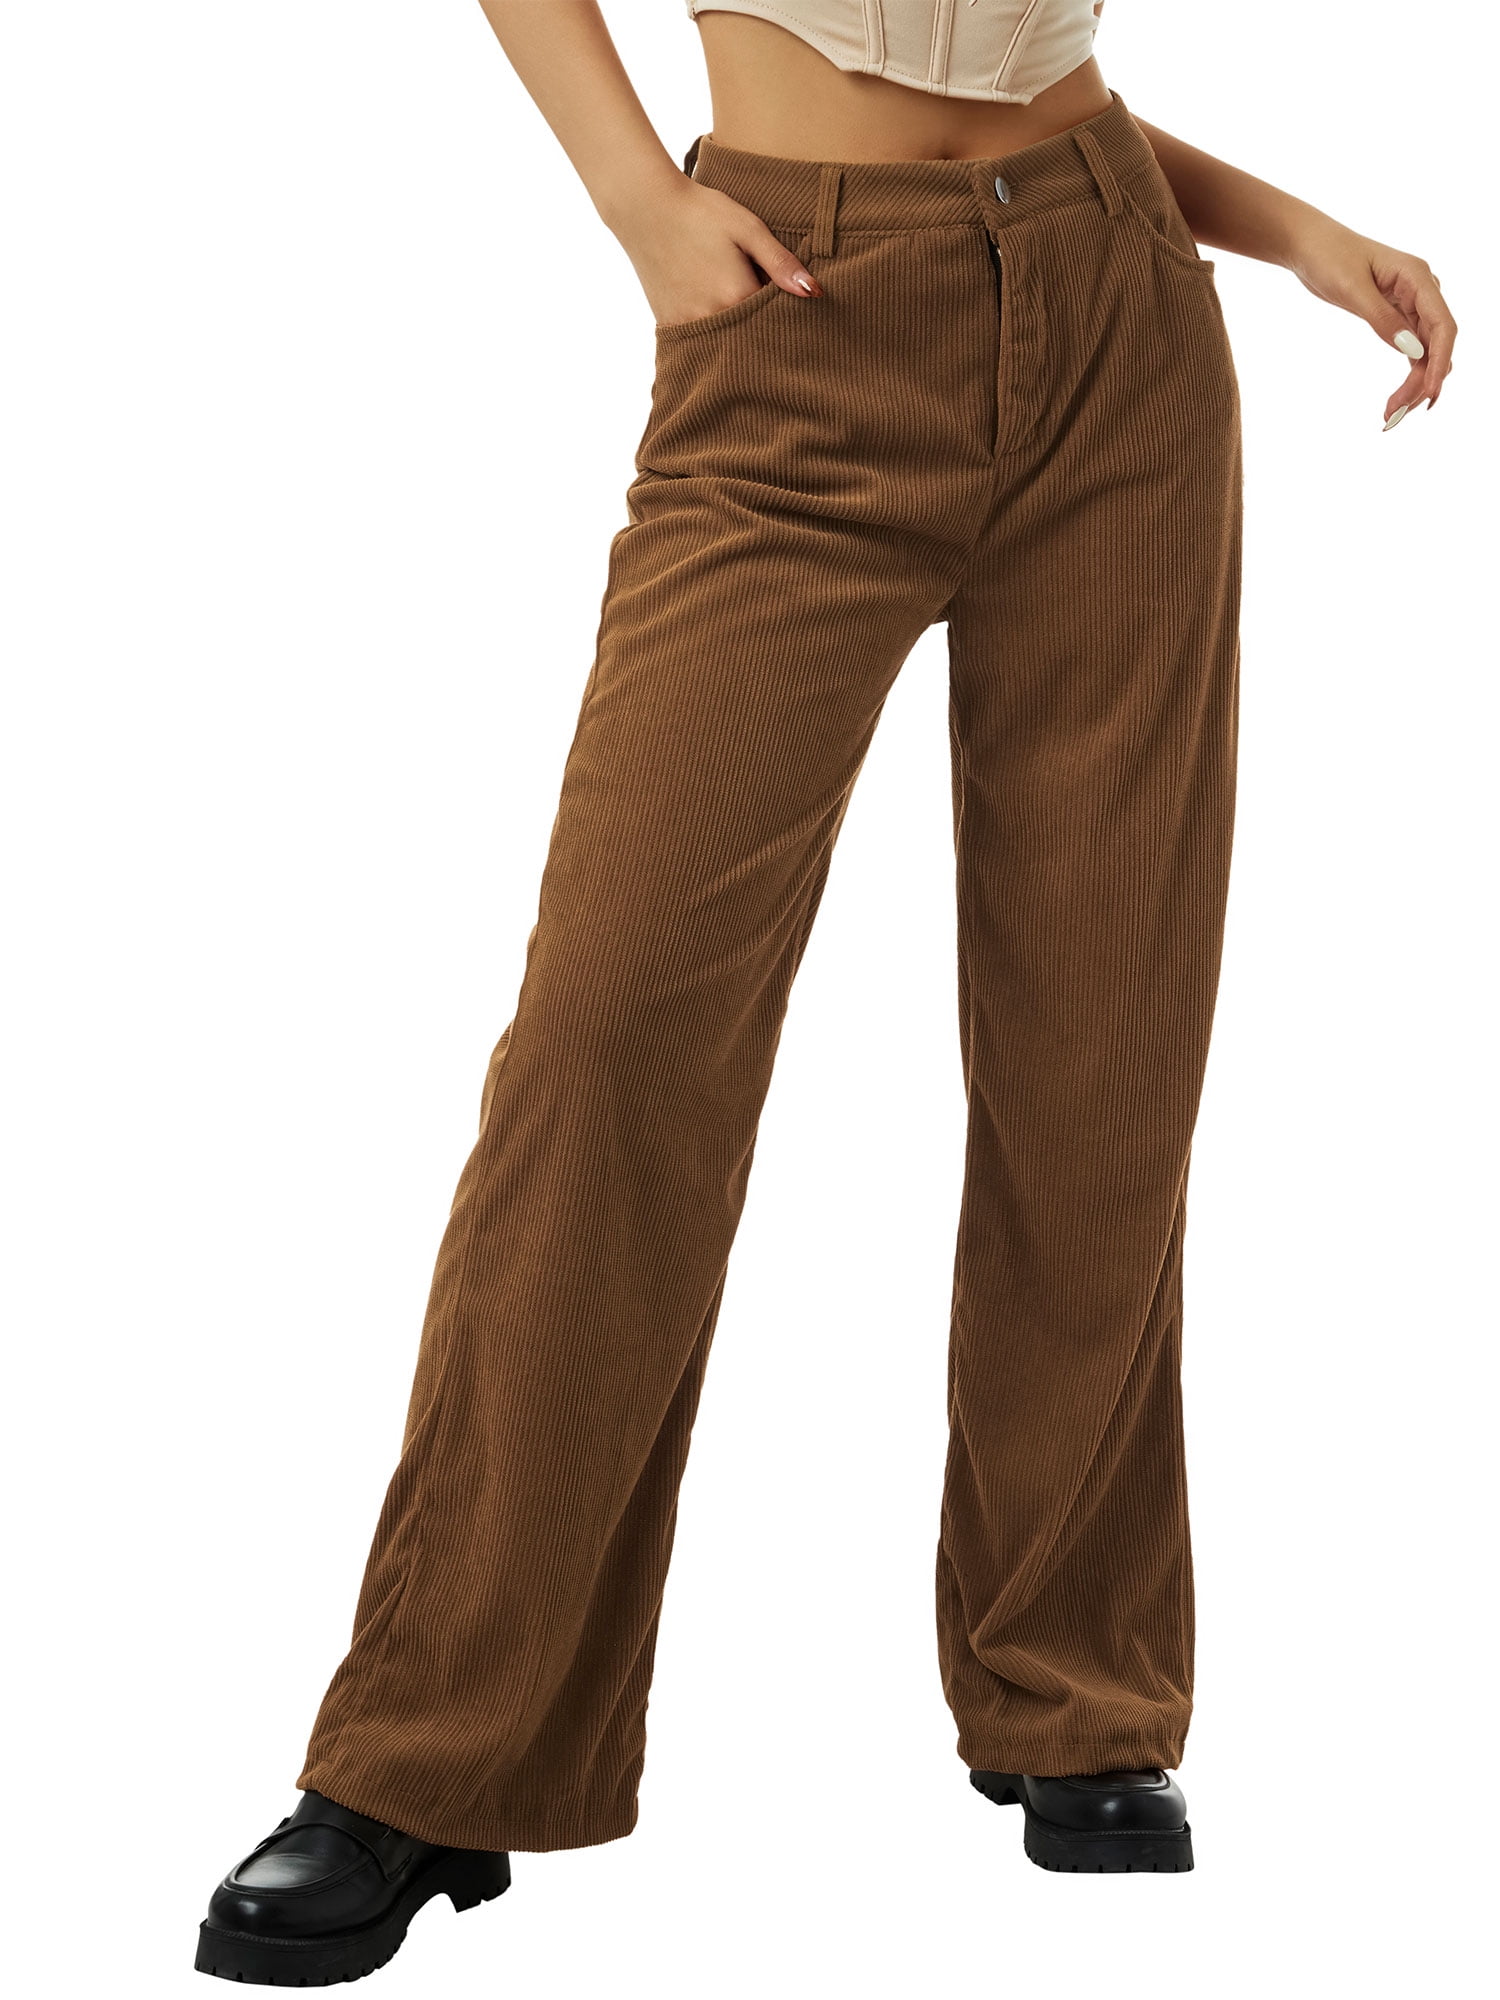 Gwiyeopda Women High Waist Corduroy Solid Color Pants Vintage Straight ...